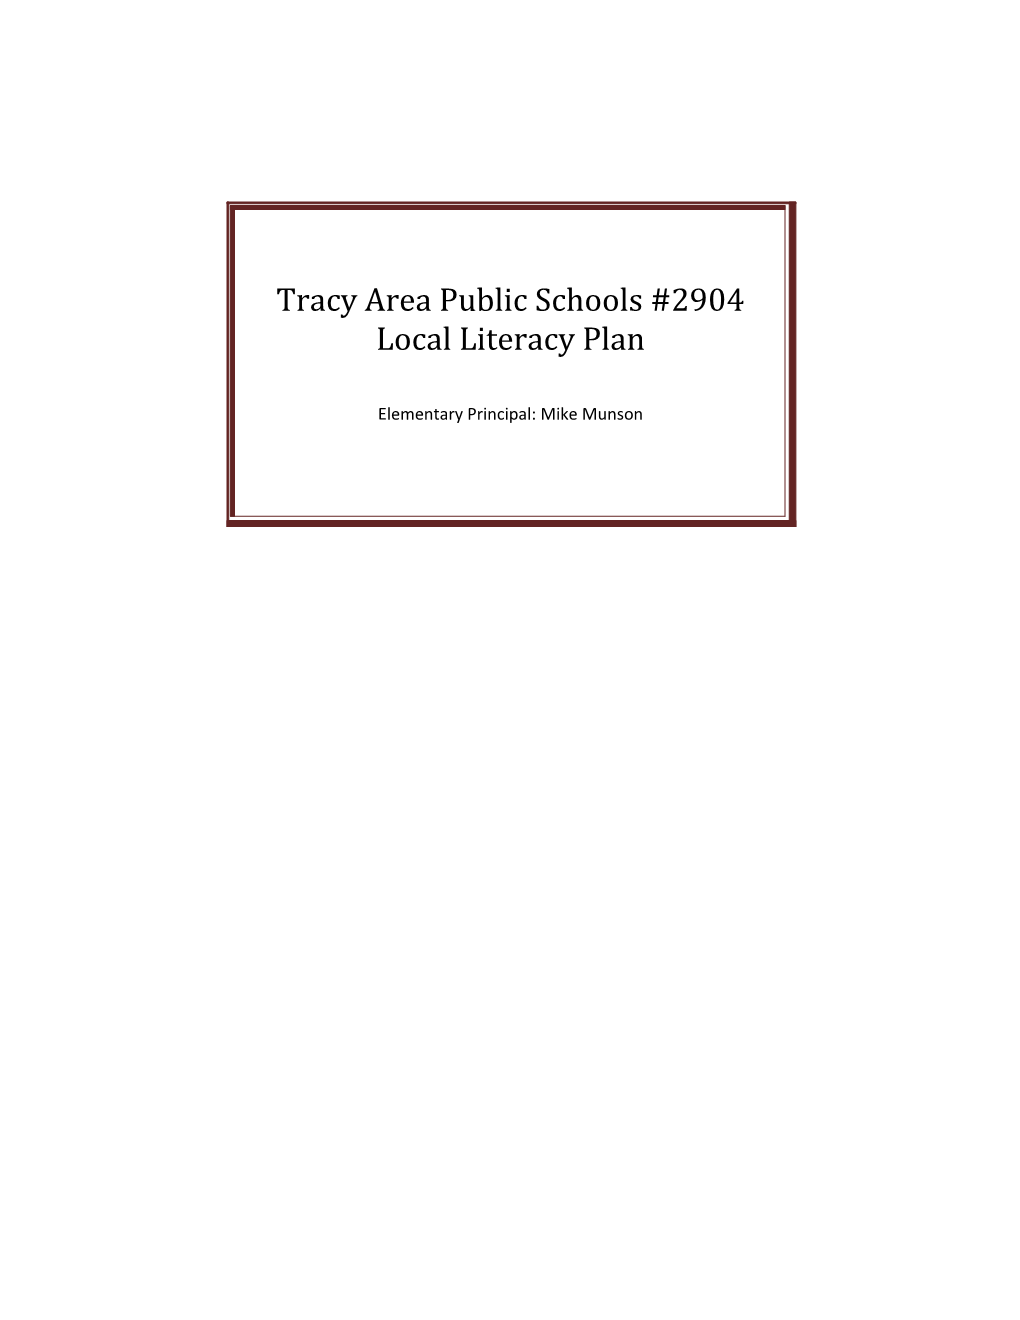 ISD 414, Minneota Public Schools Local Literacy Plan